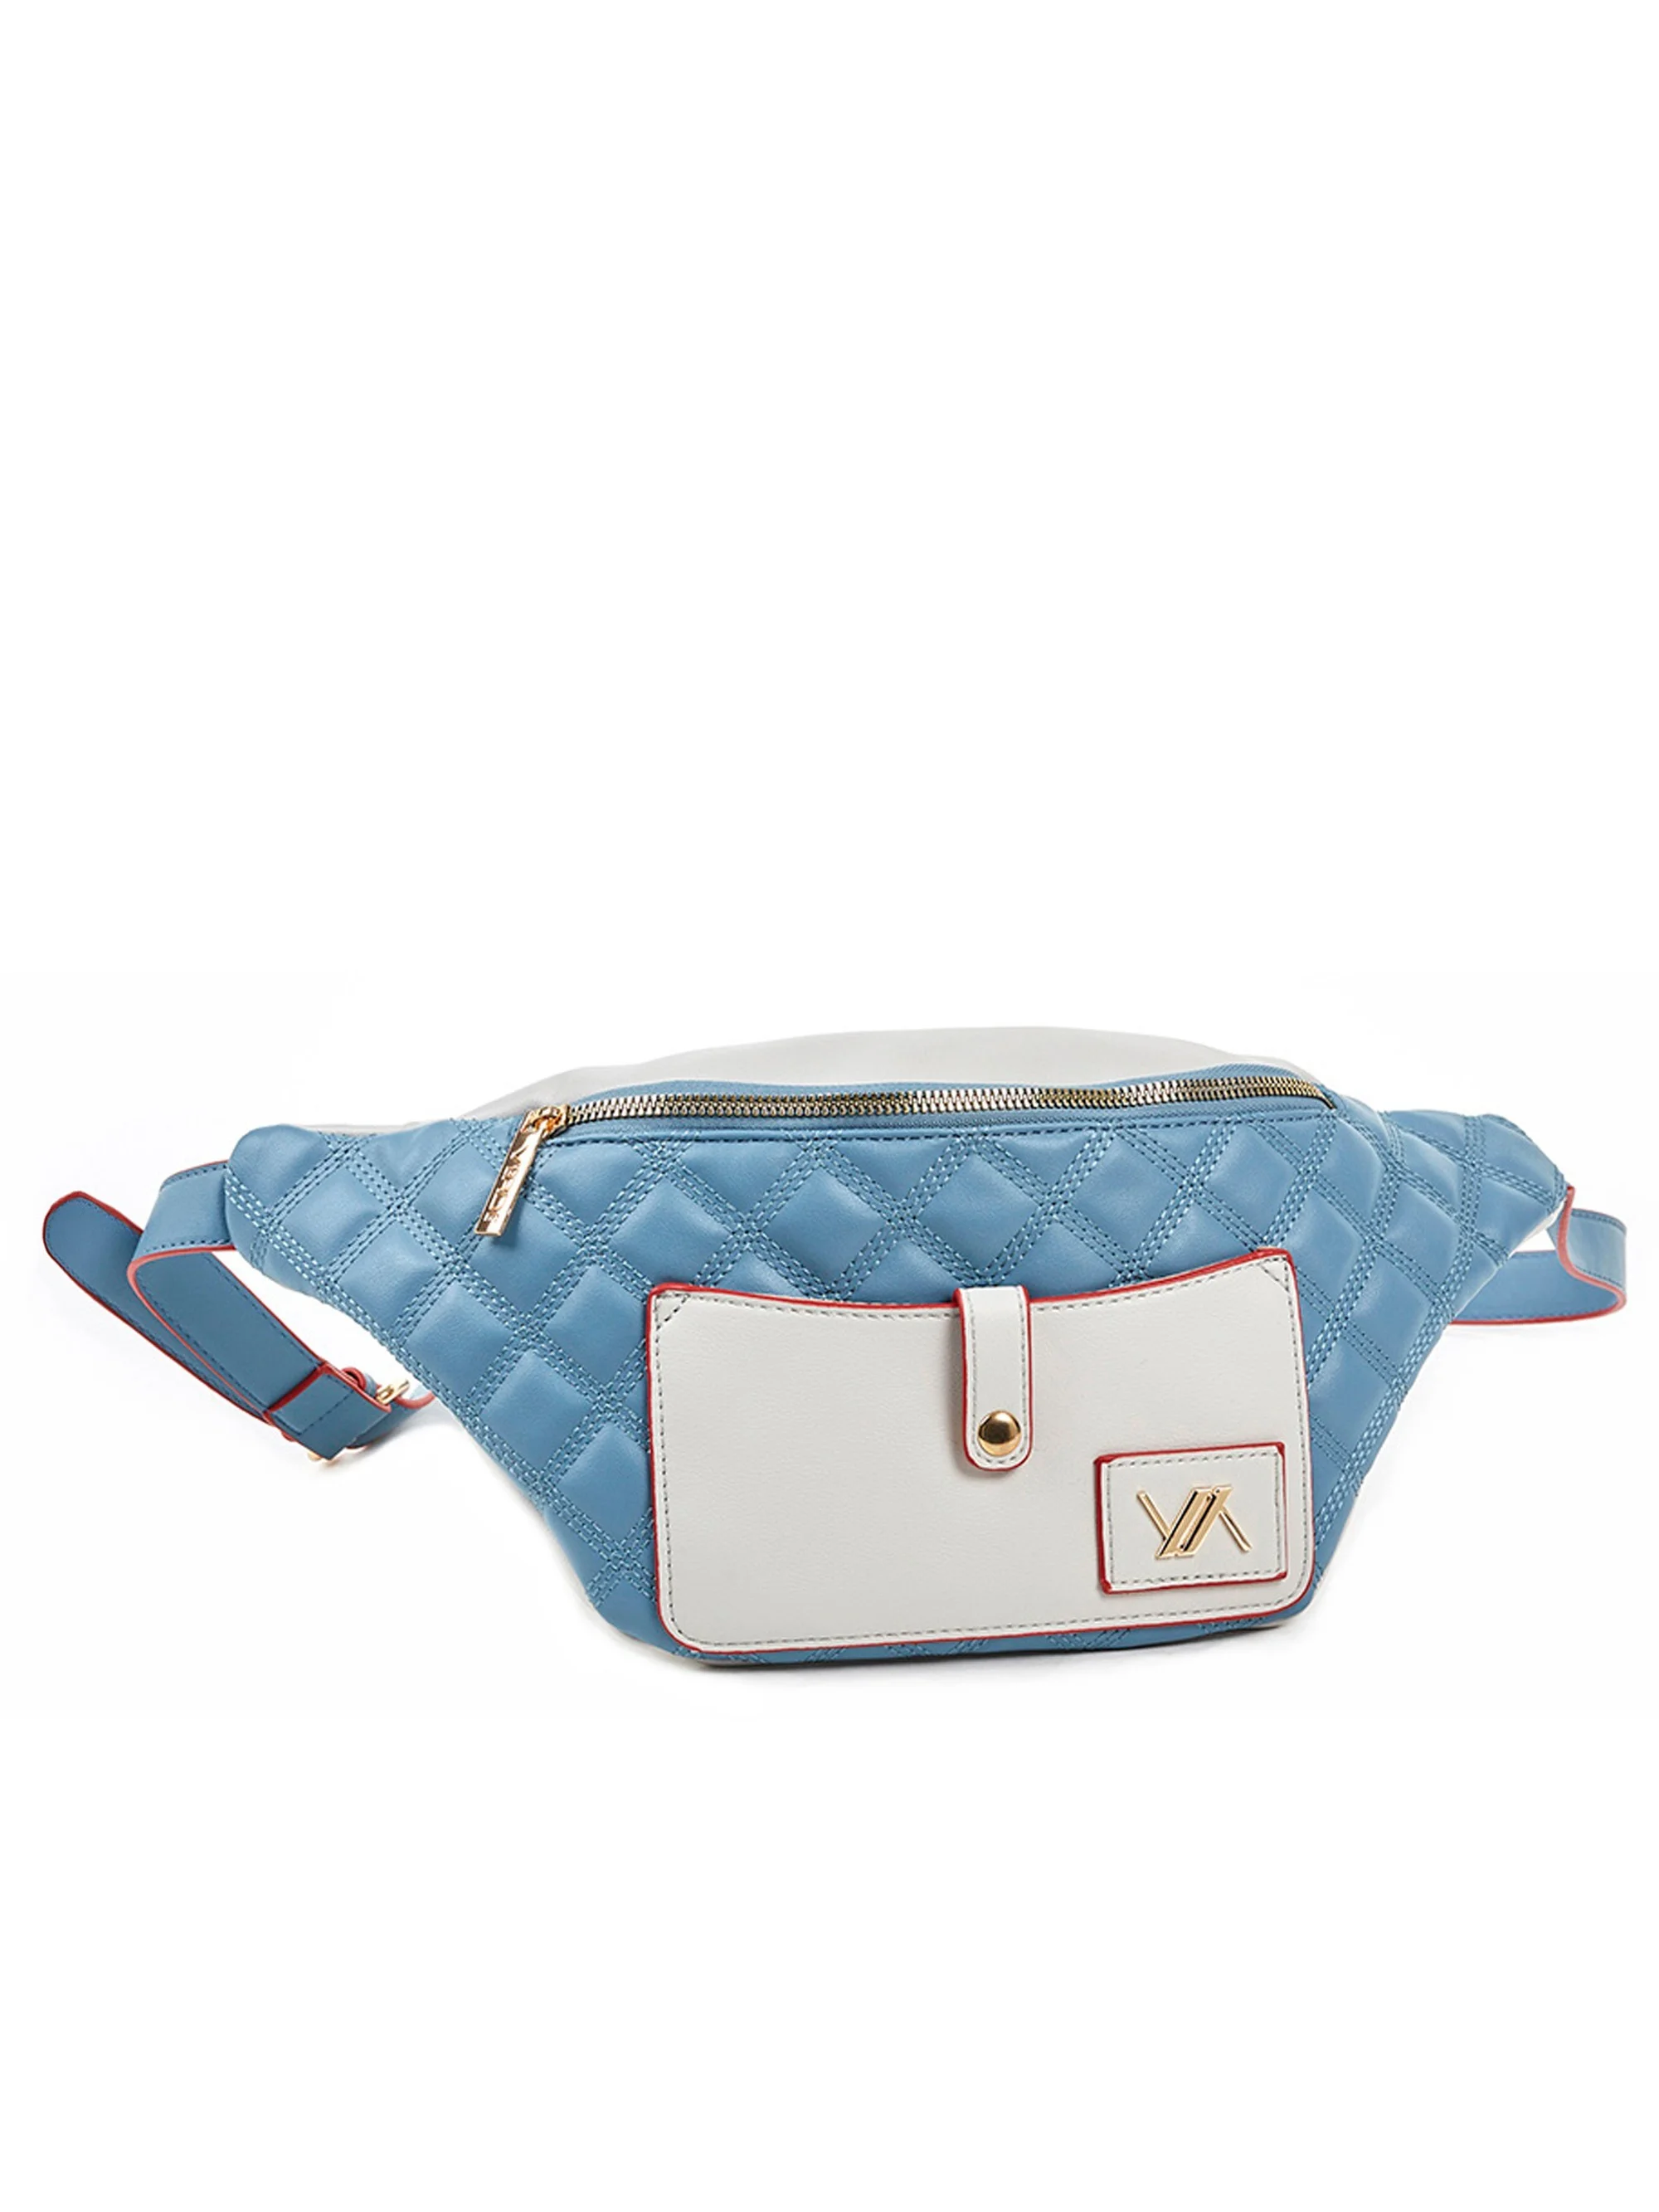 Поясная сумка женская VERDE 6315ve-16, blue/grey